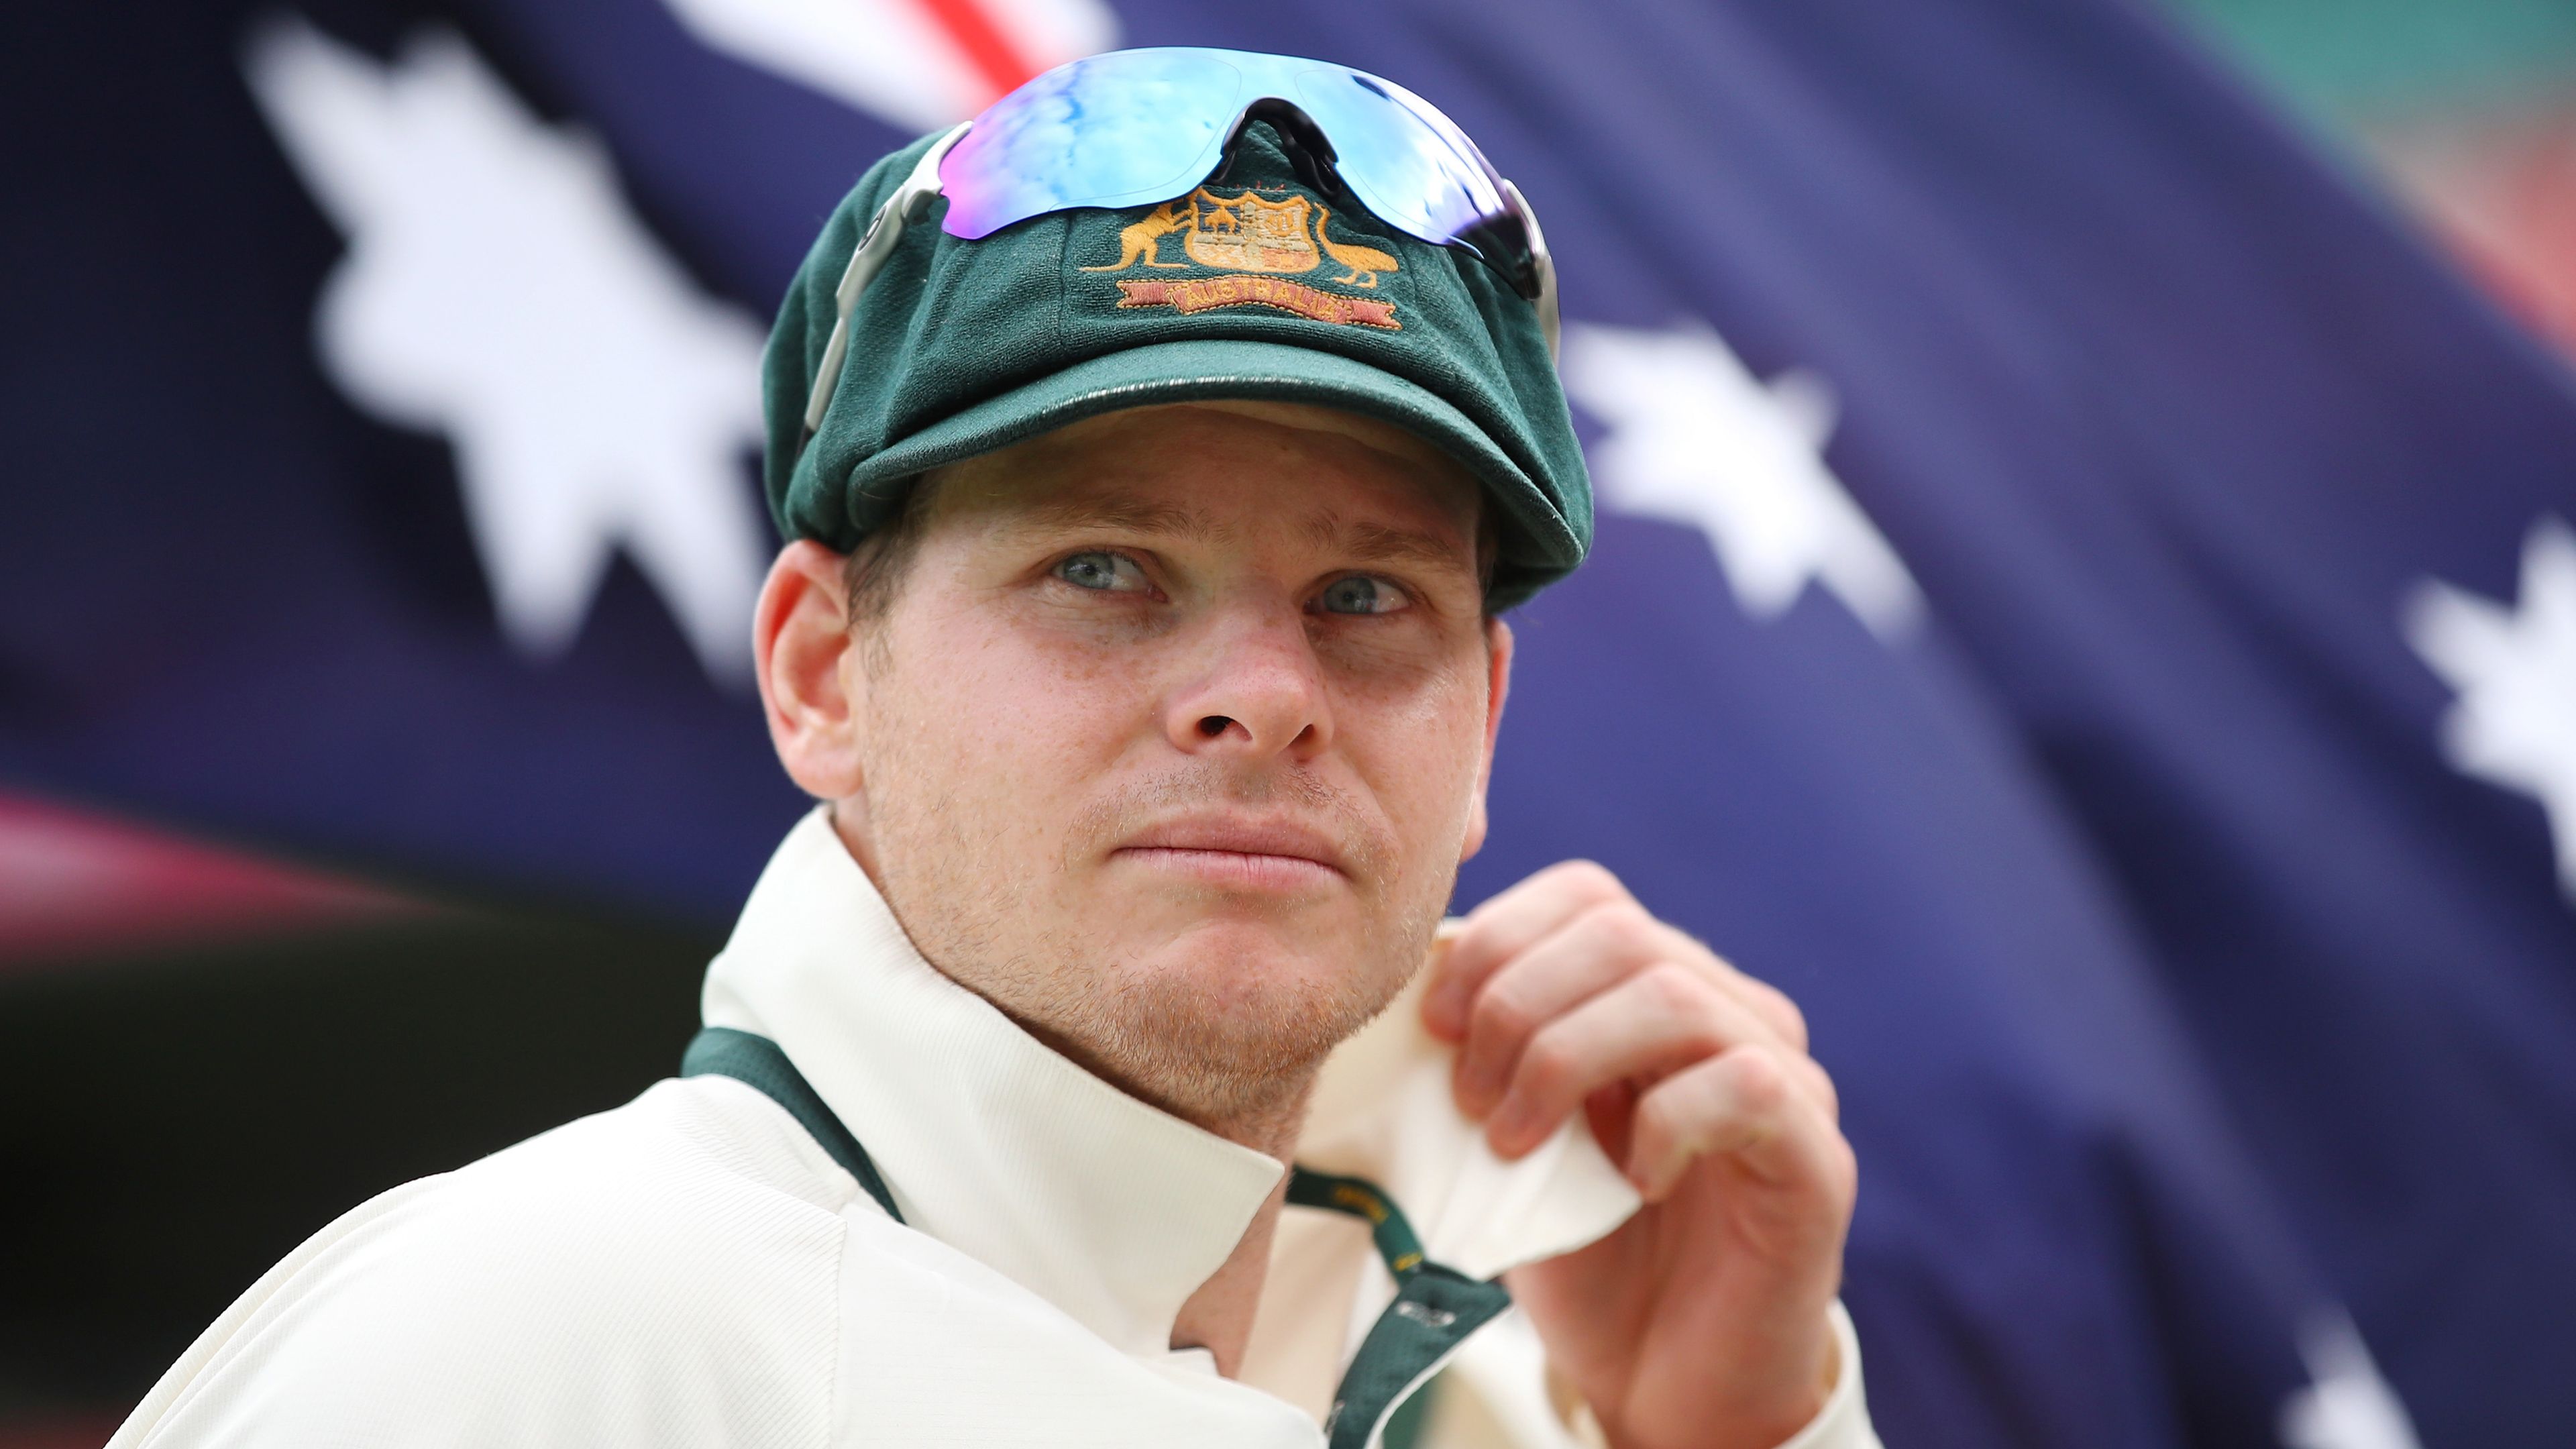 Cricket Australia confirms official postponement of Test match against Afghanistan